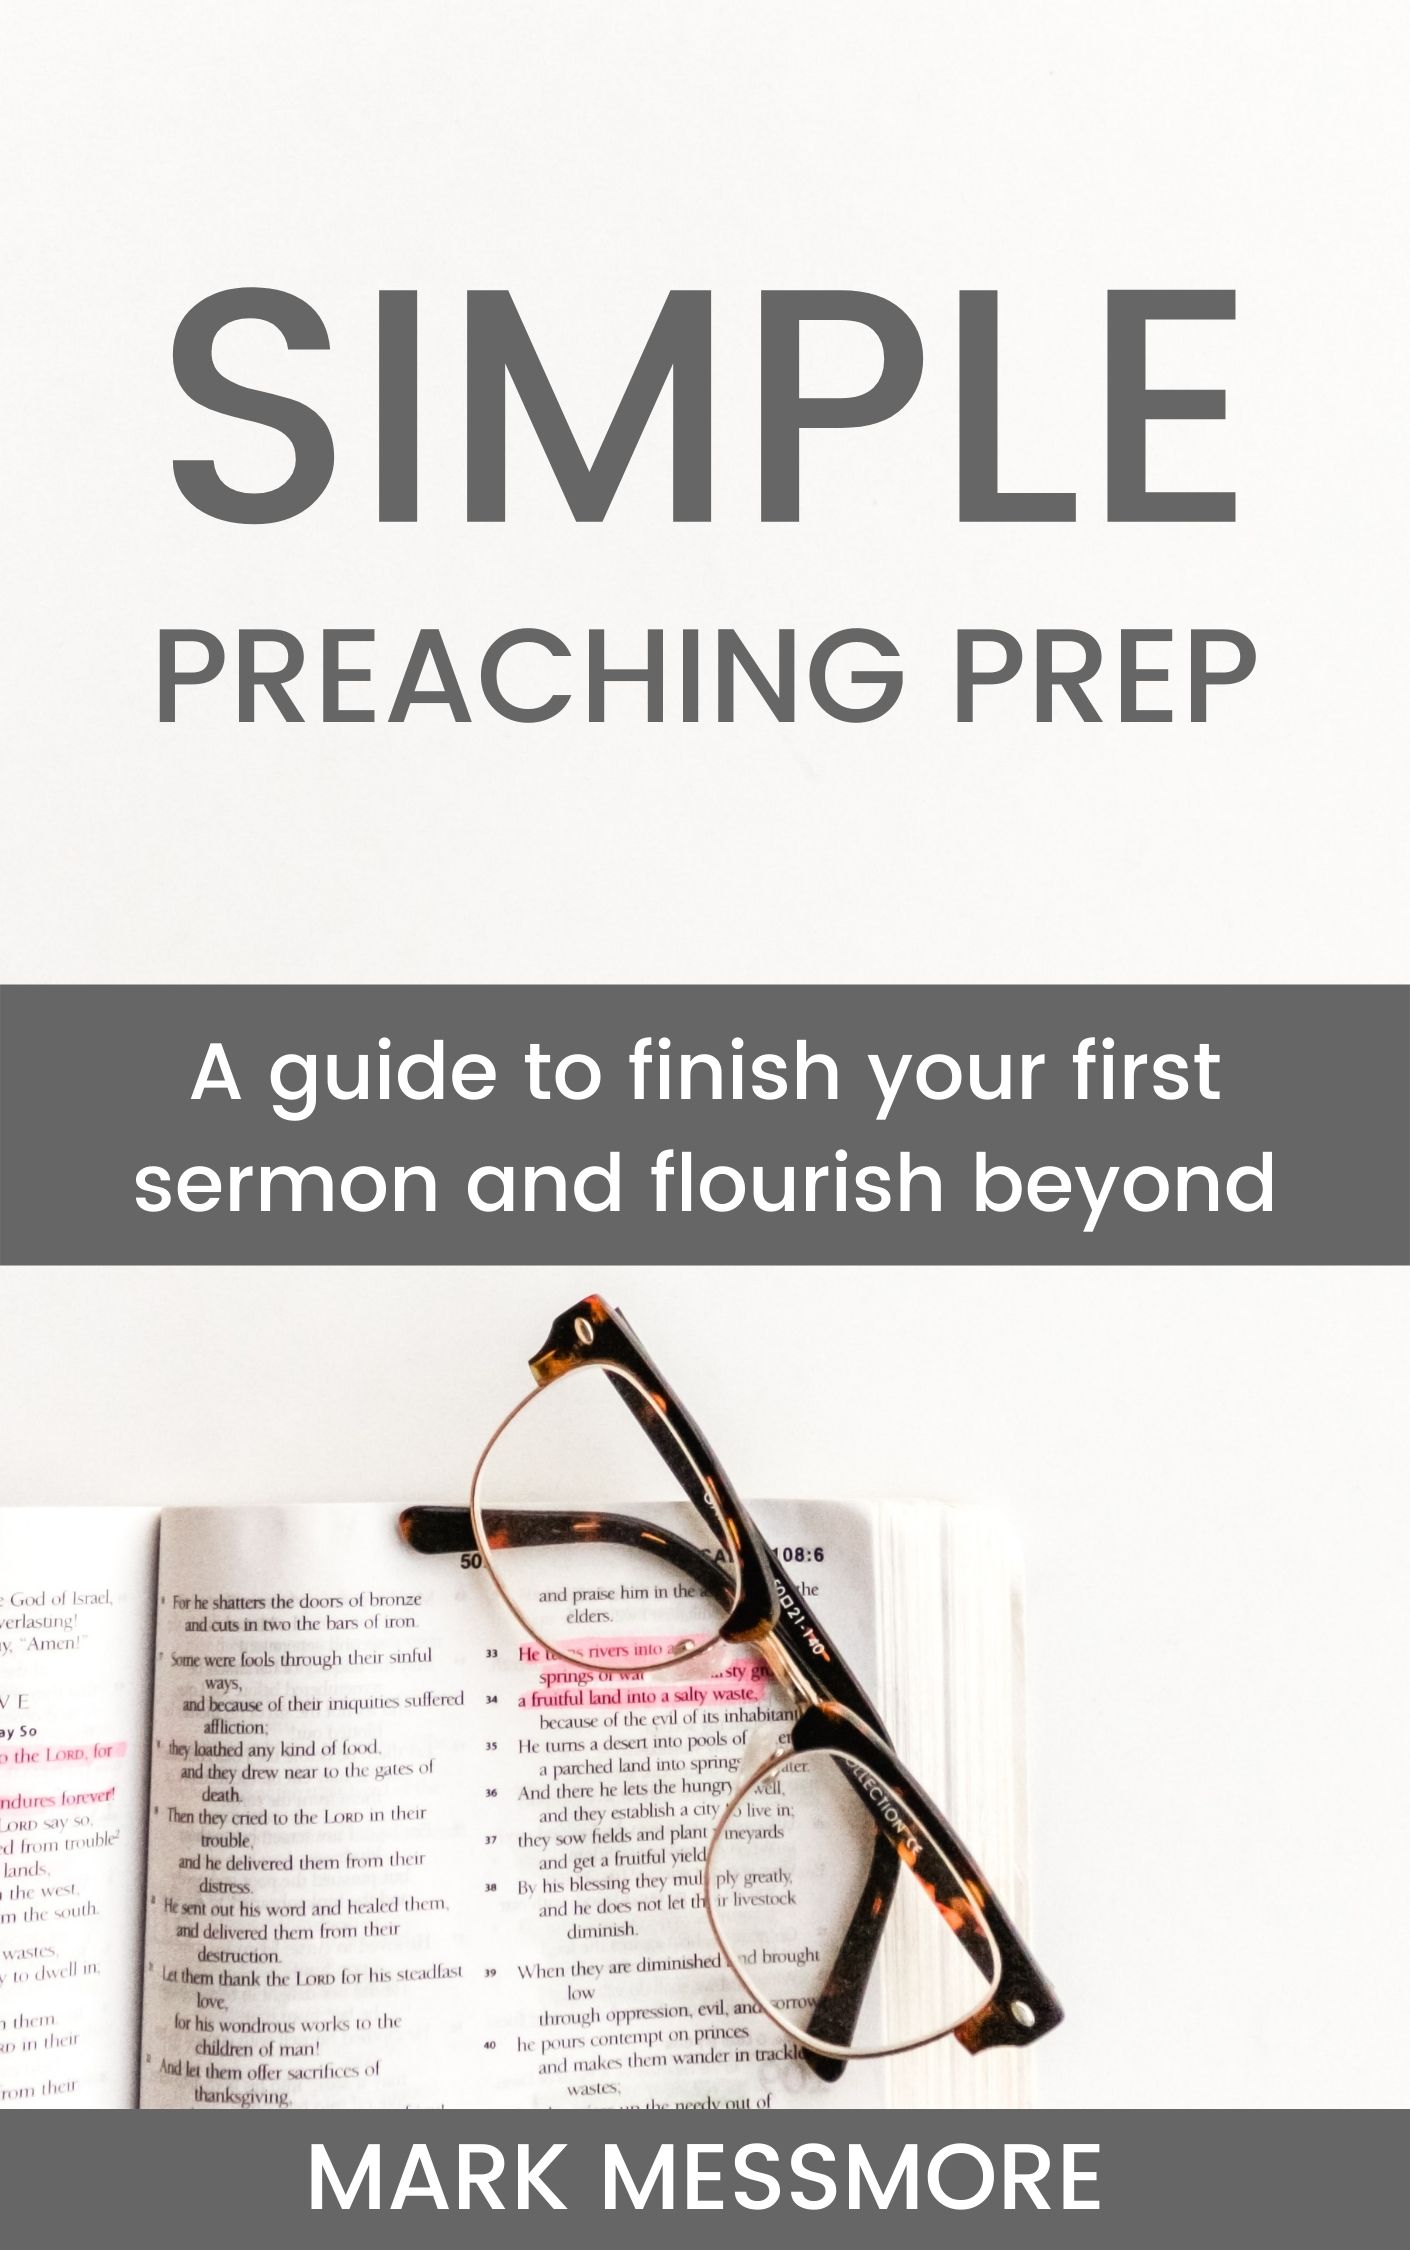 FREE: Simple Preaching Prep by Mark Messmore